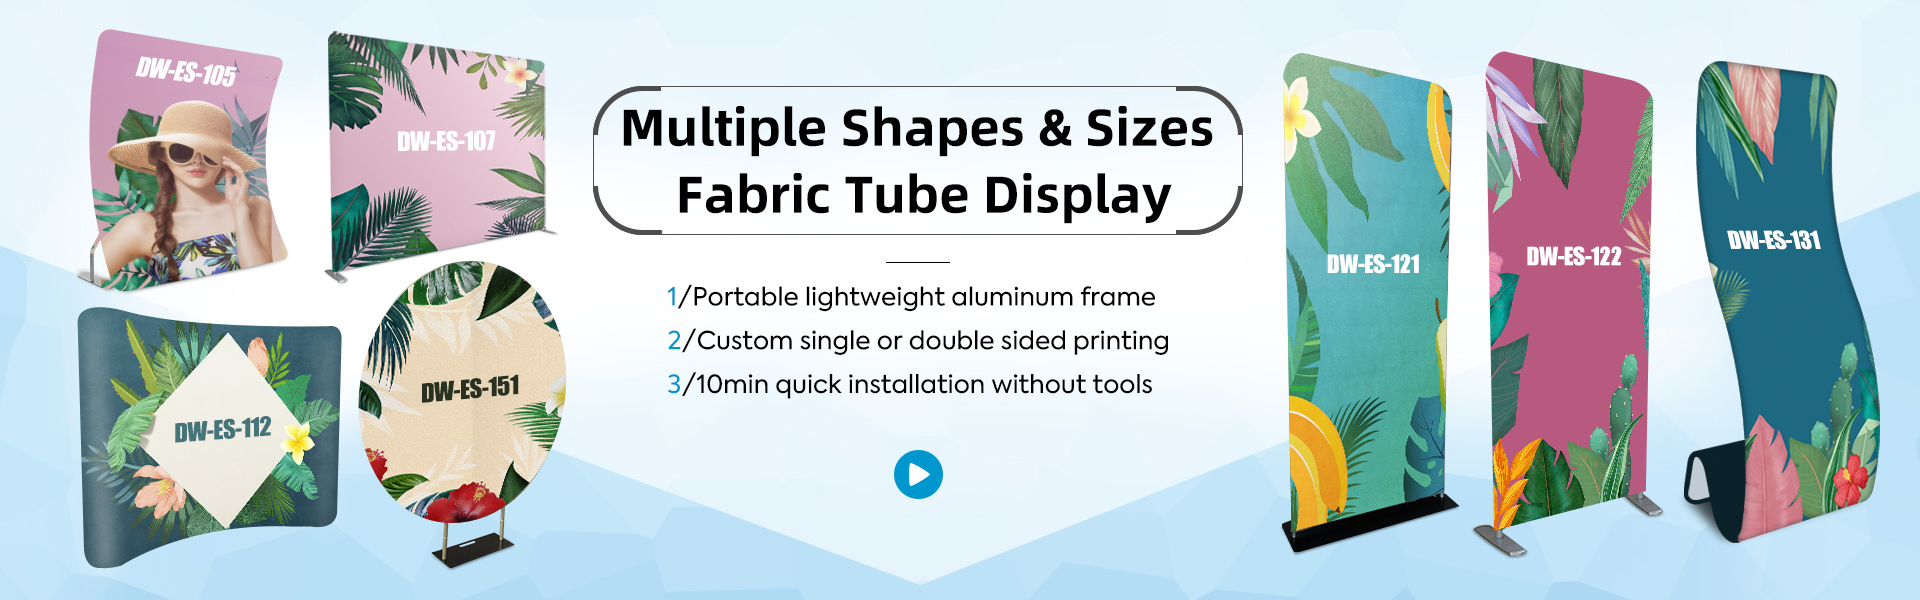 Multiple Shapes & Sizes Fabric Tube Display